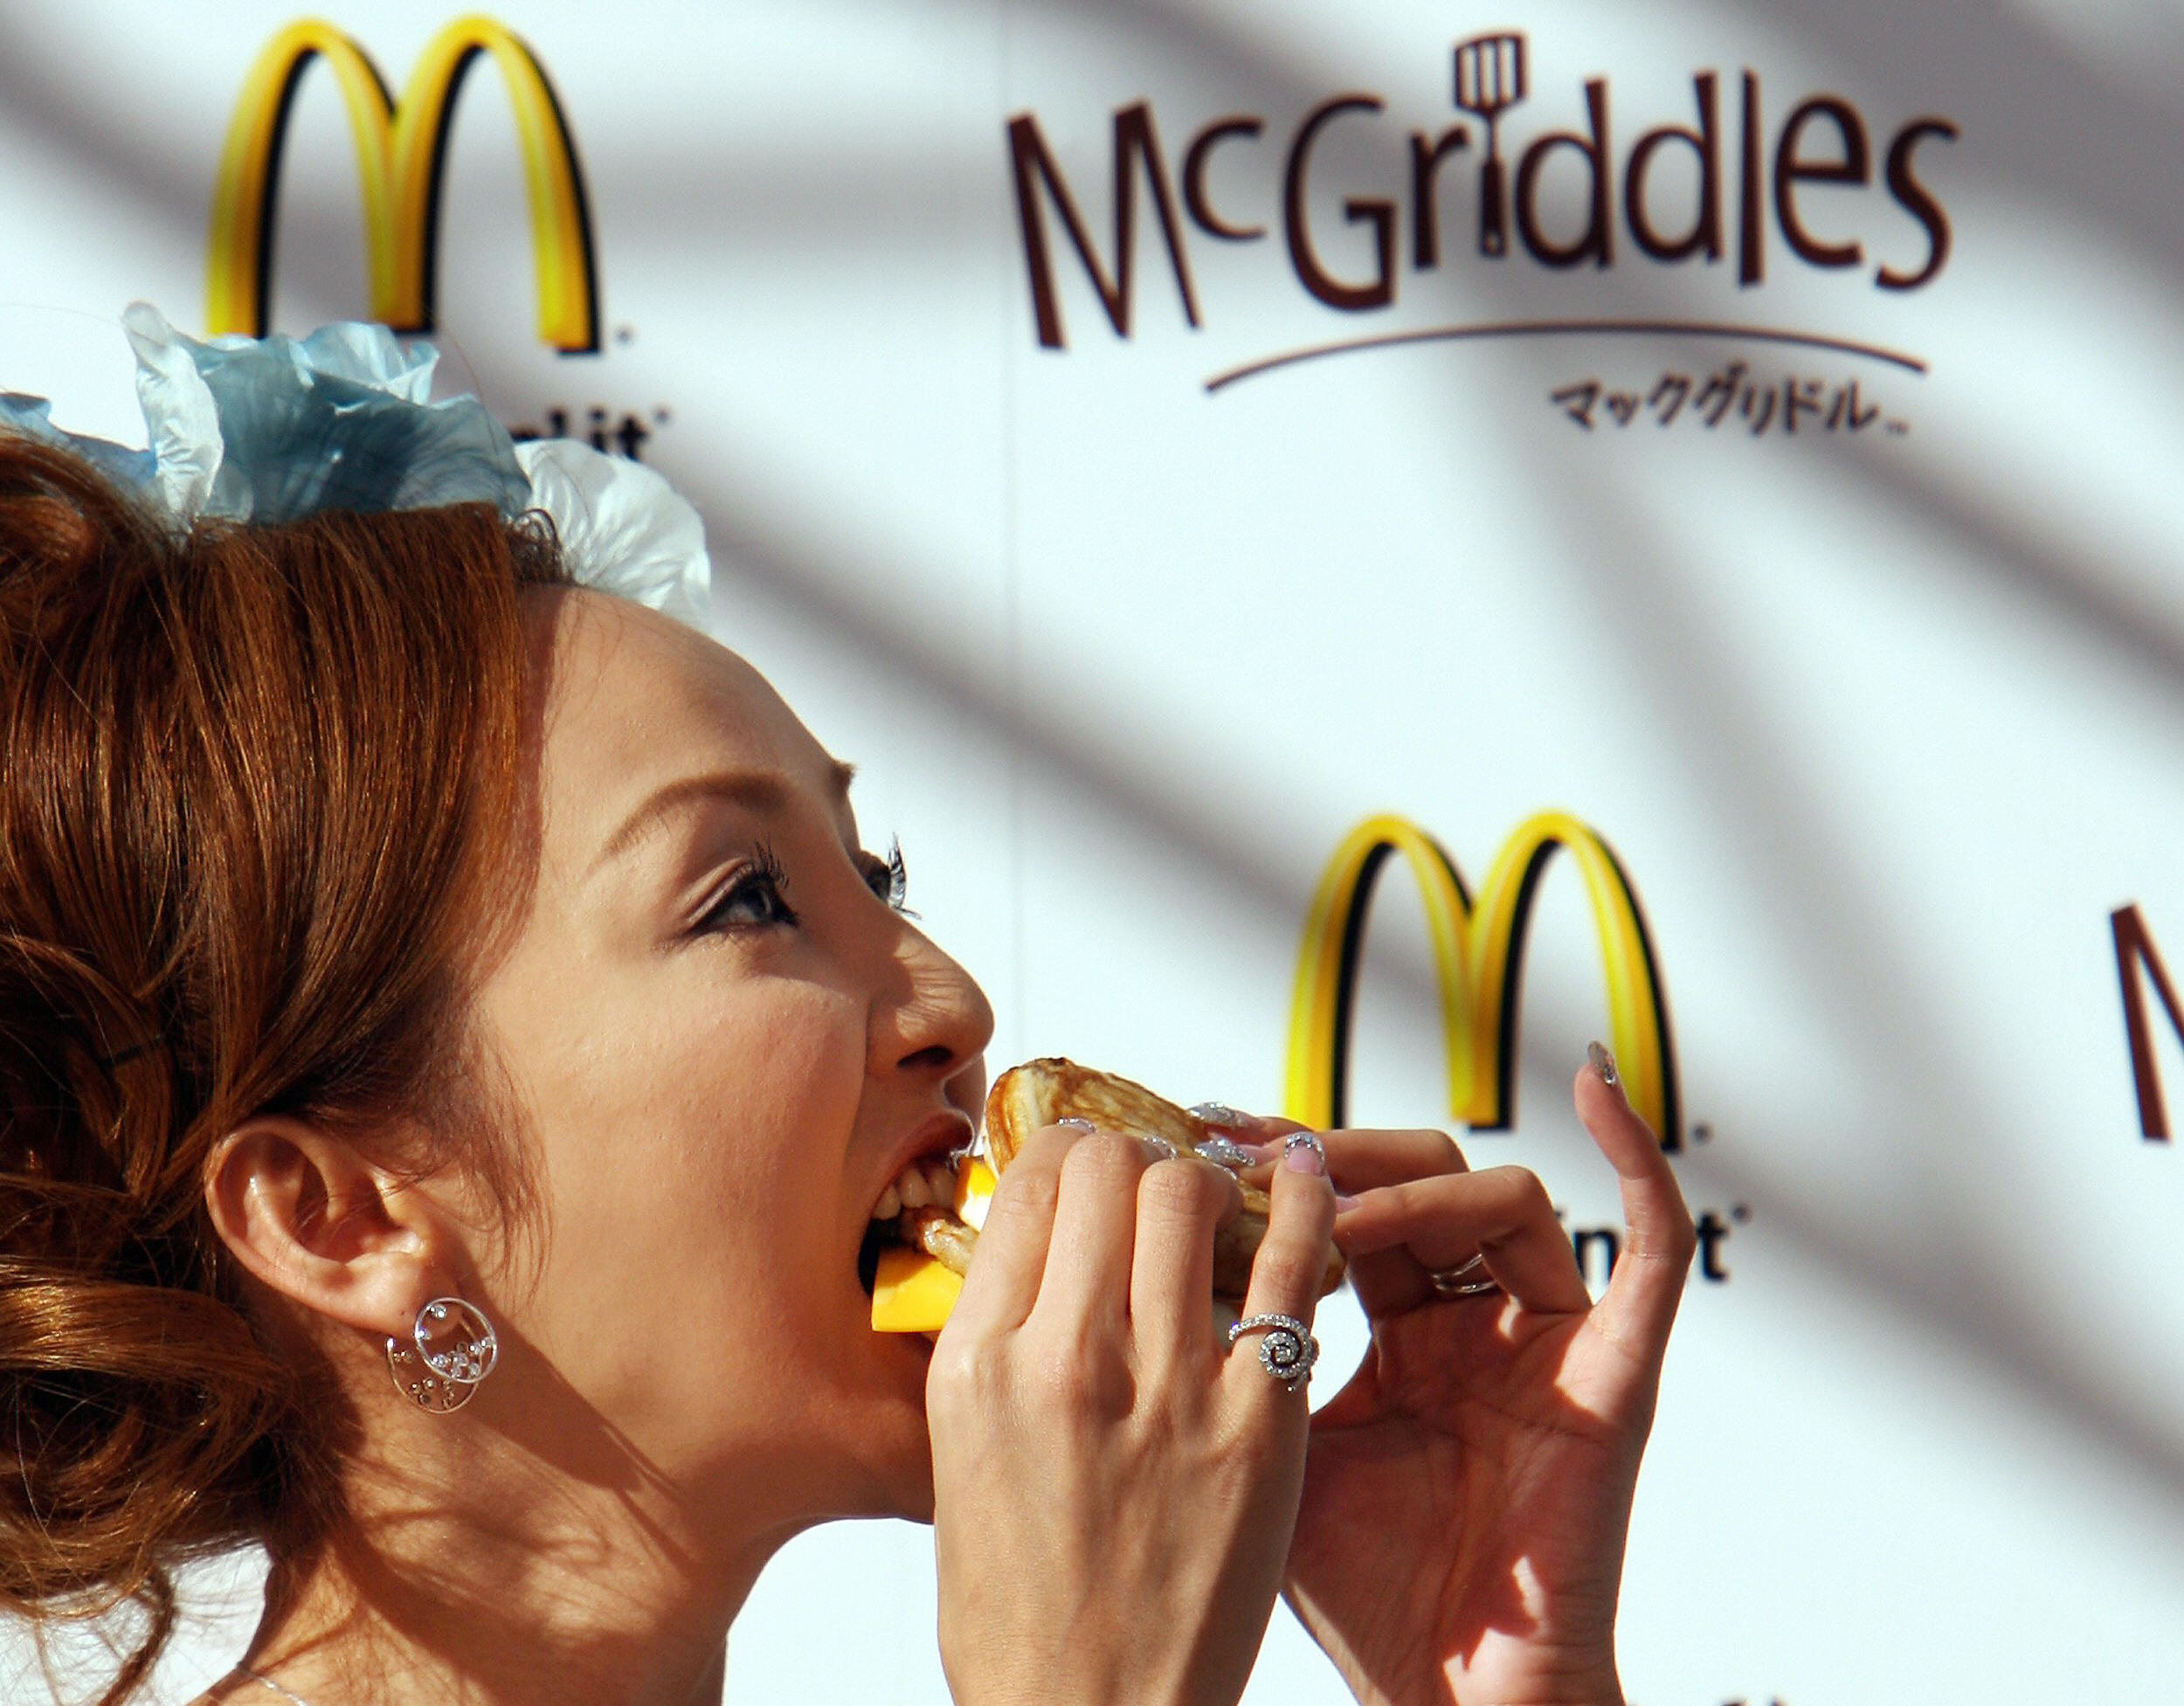 Japanese actress Uno Kanda eats McDonald